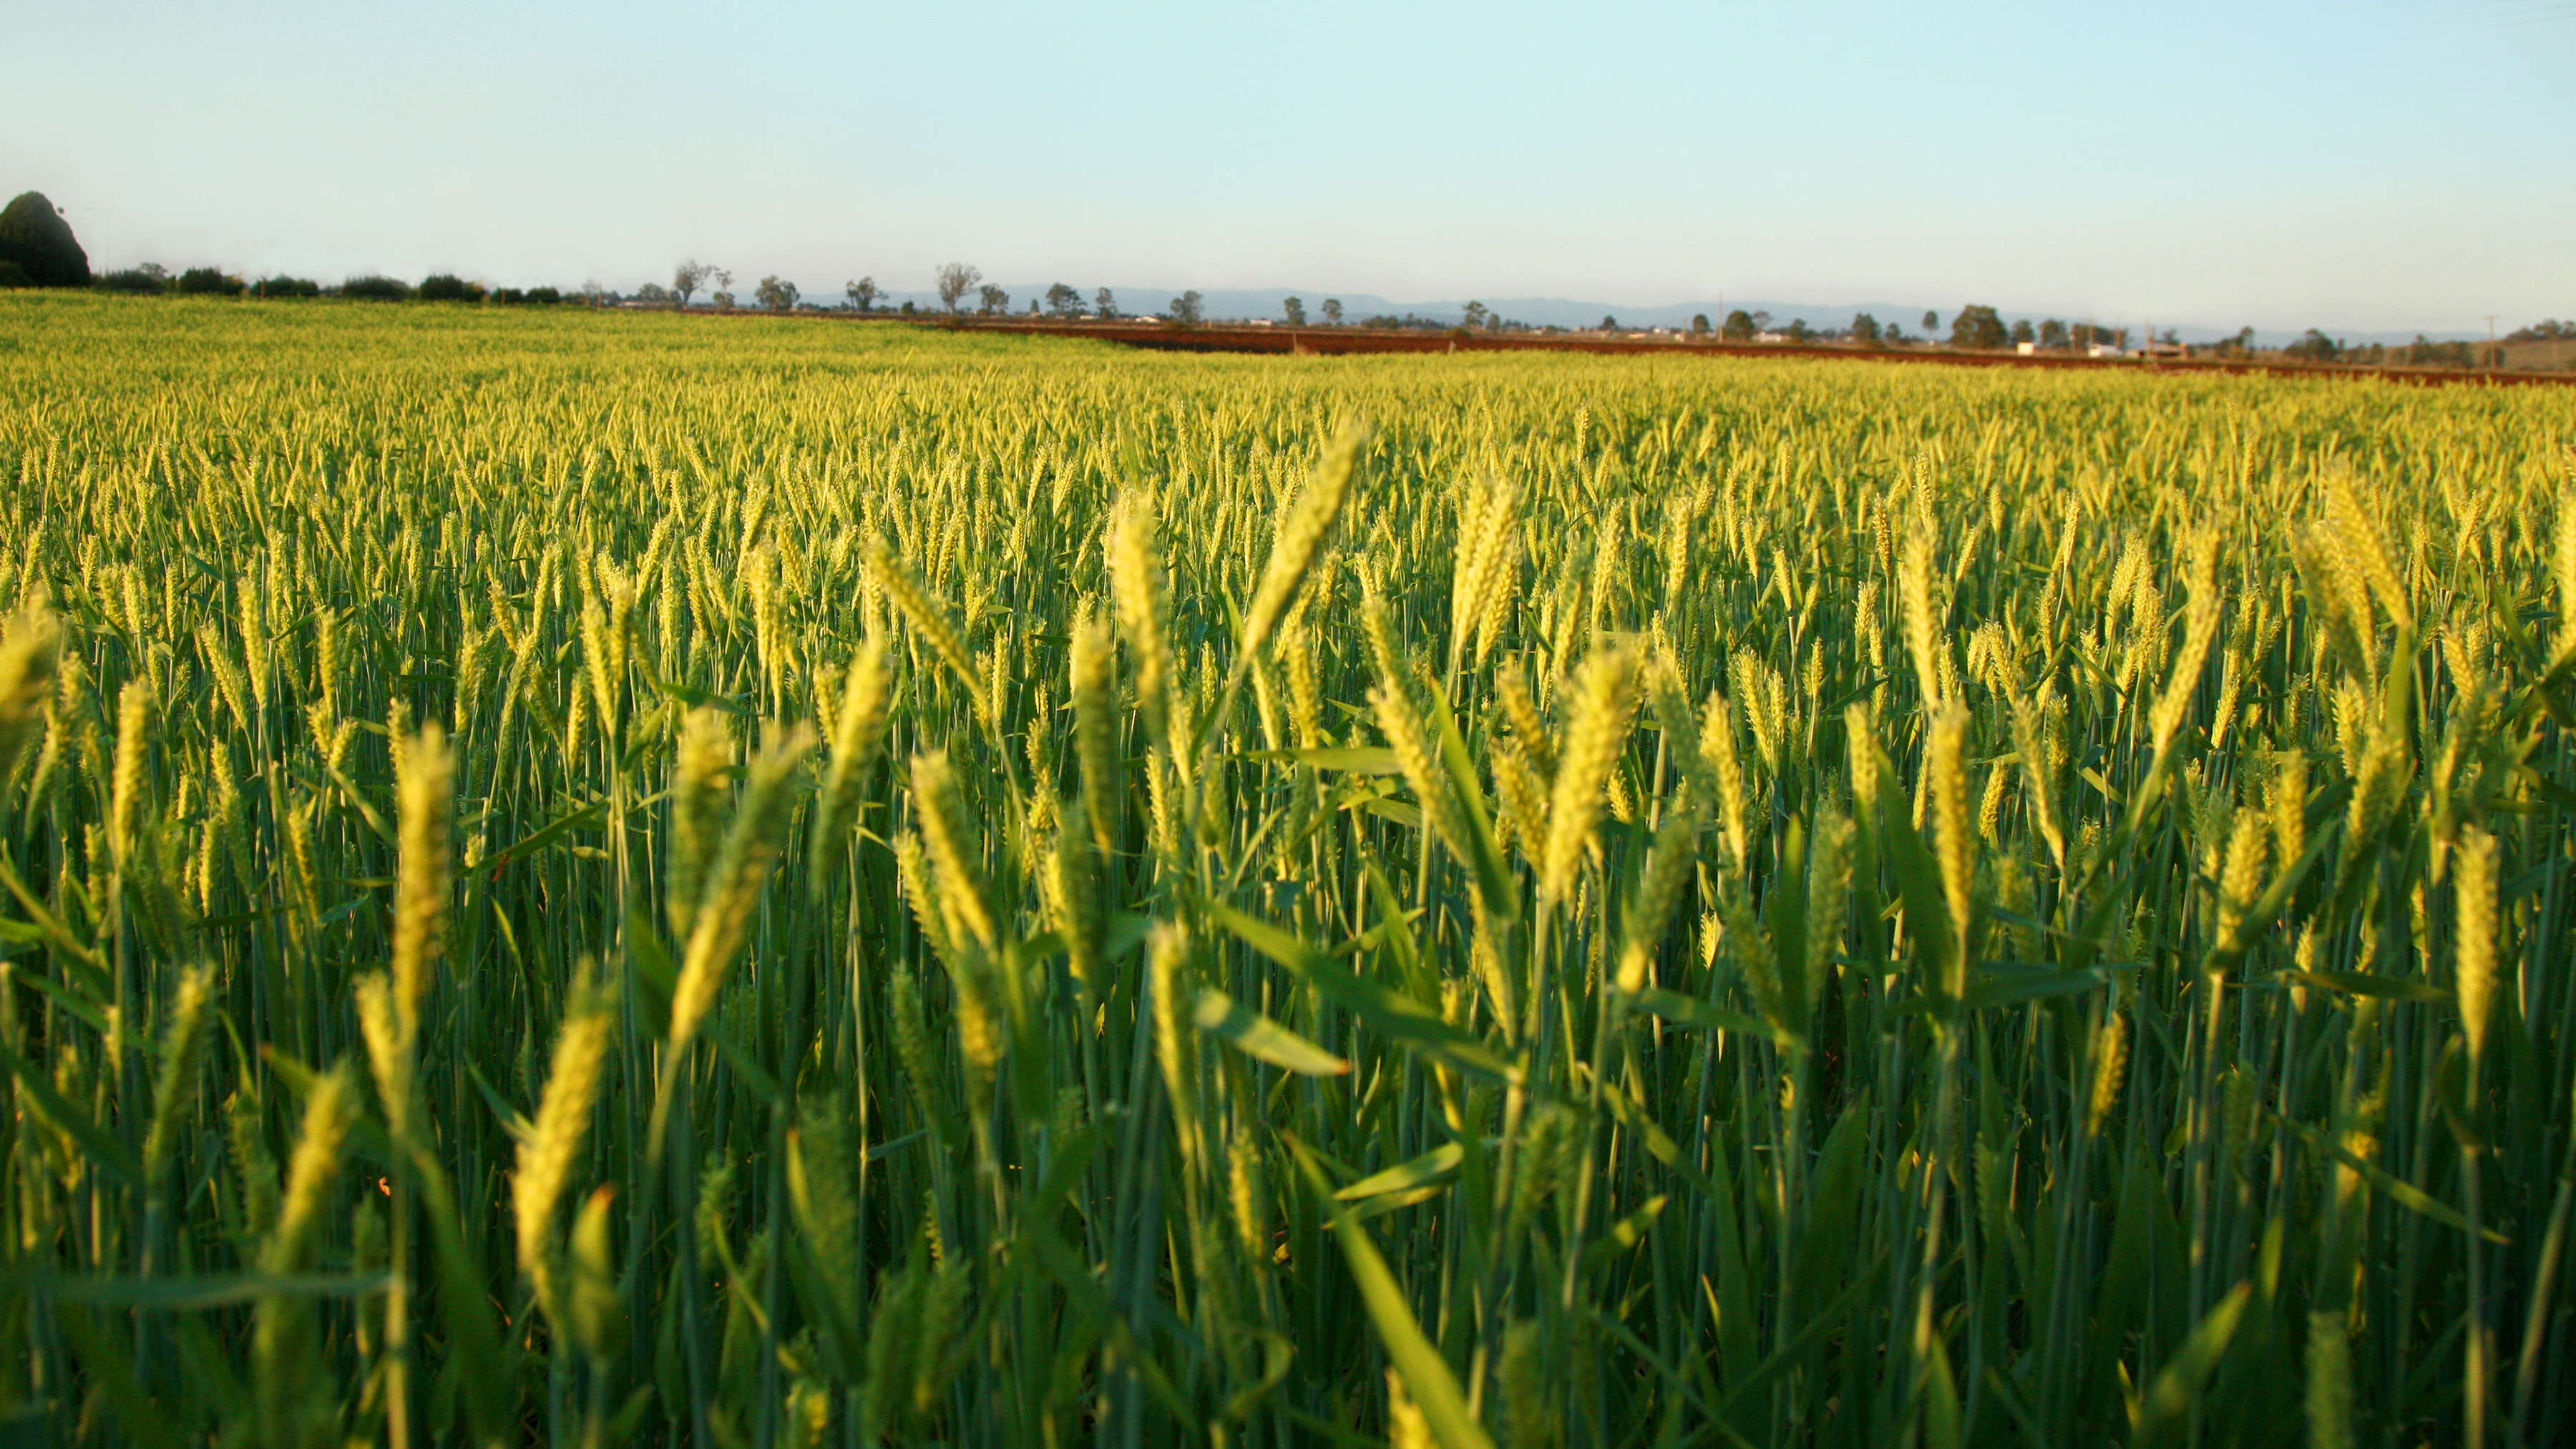 A sunlit field of green barley stalks. Photo: EtchedDesignRemedies / iStock.